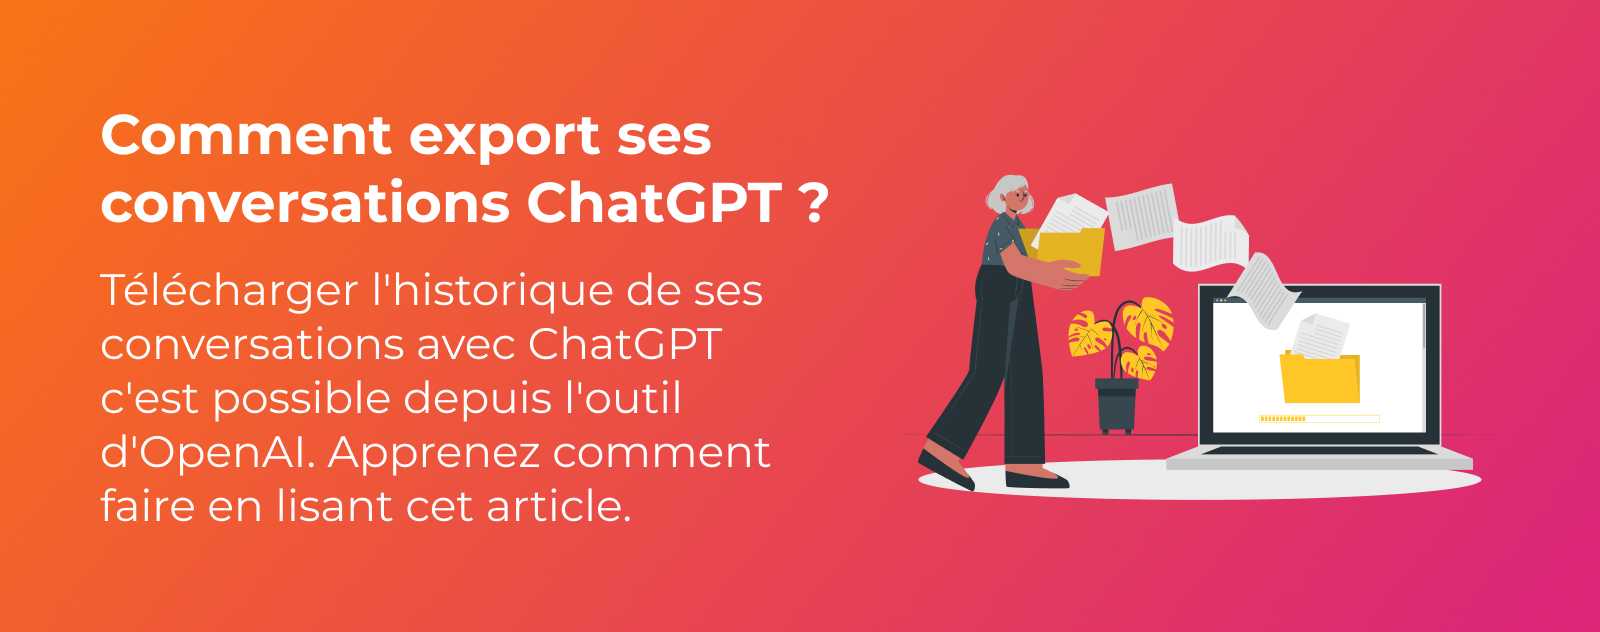 Comment export ses conversations avec ChatGPT ?